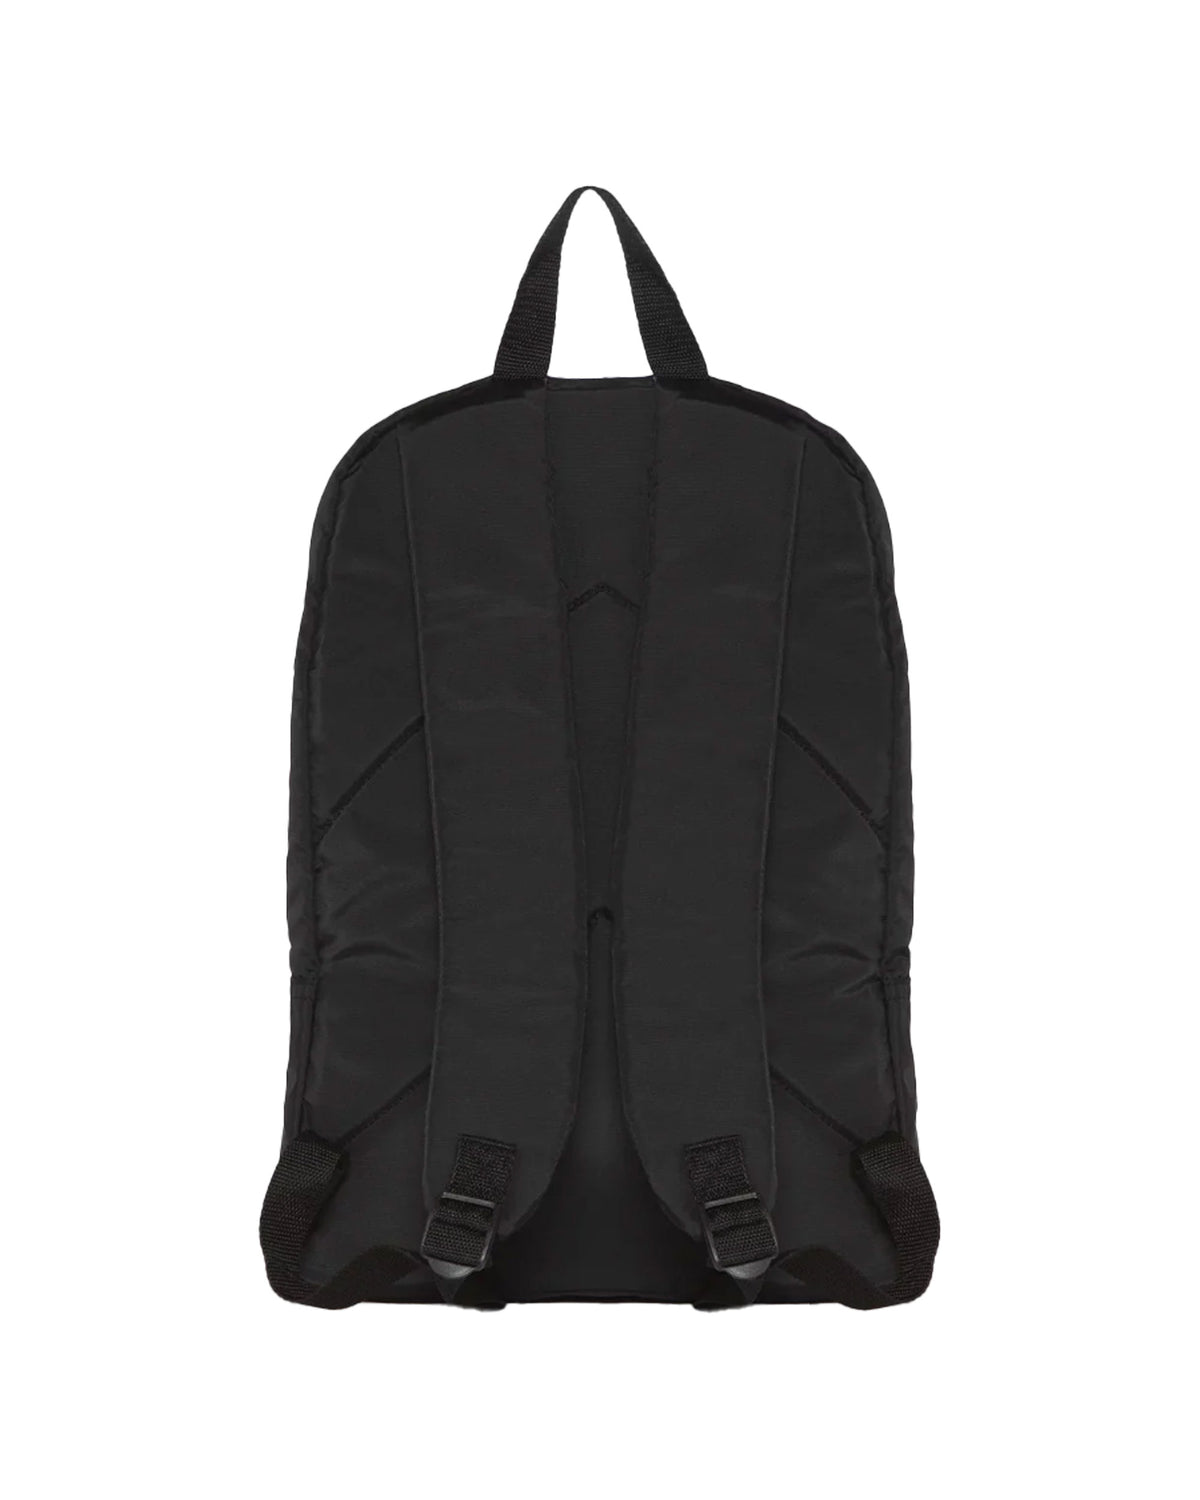 Backpack Refrigiwear Original Bag Black